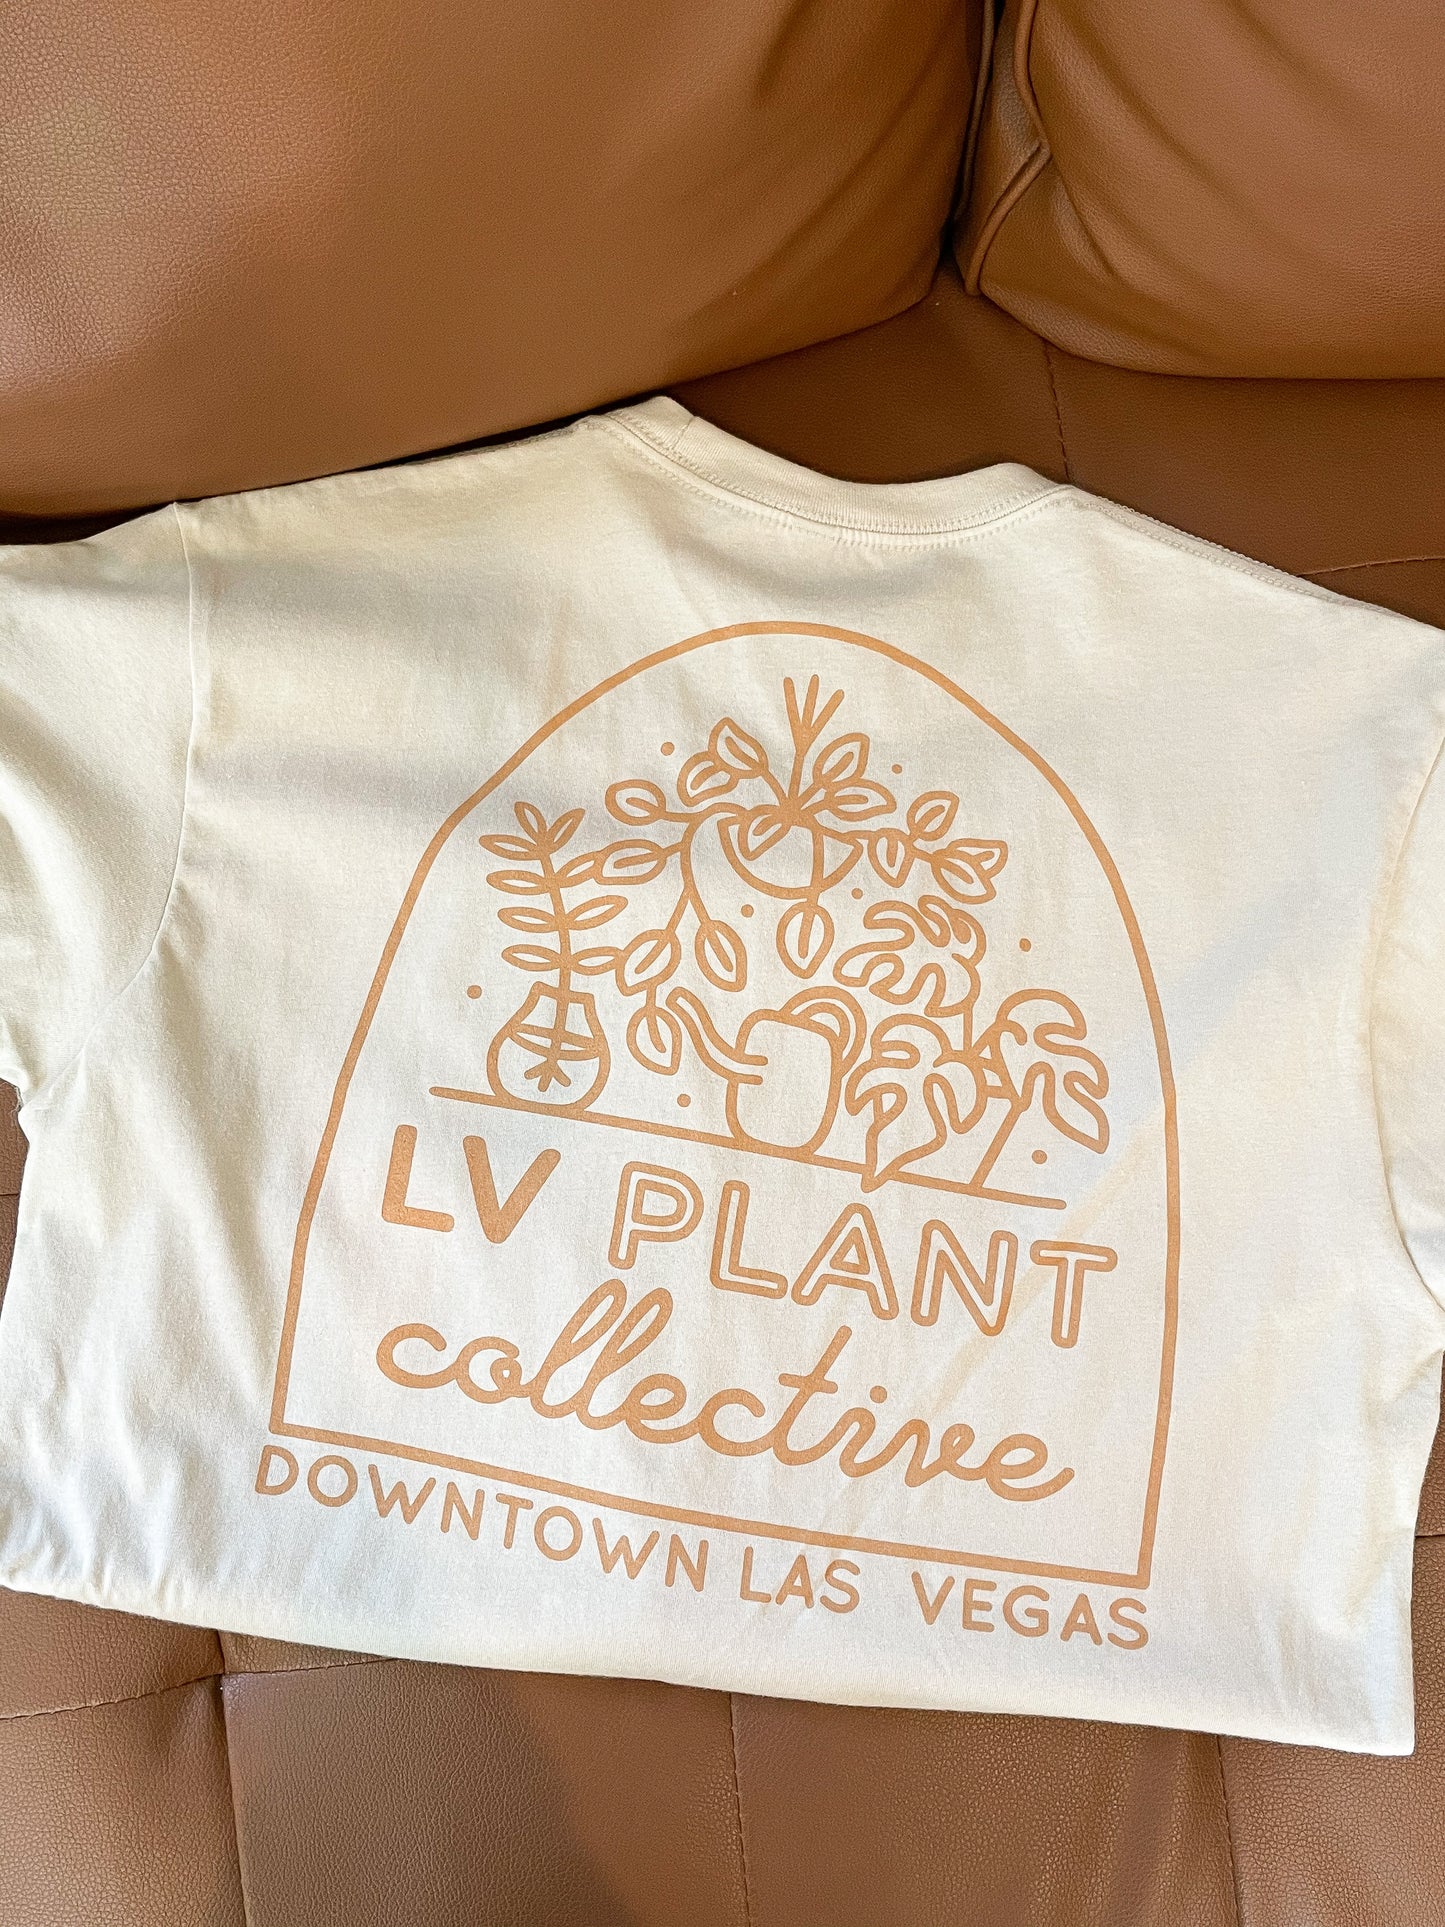 Plant Collective Shirt